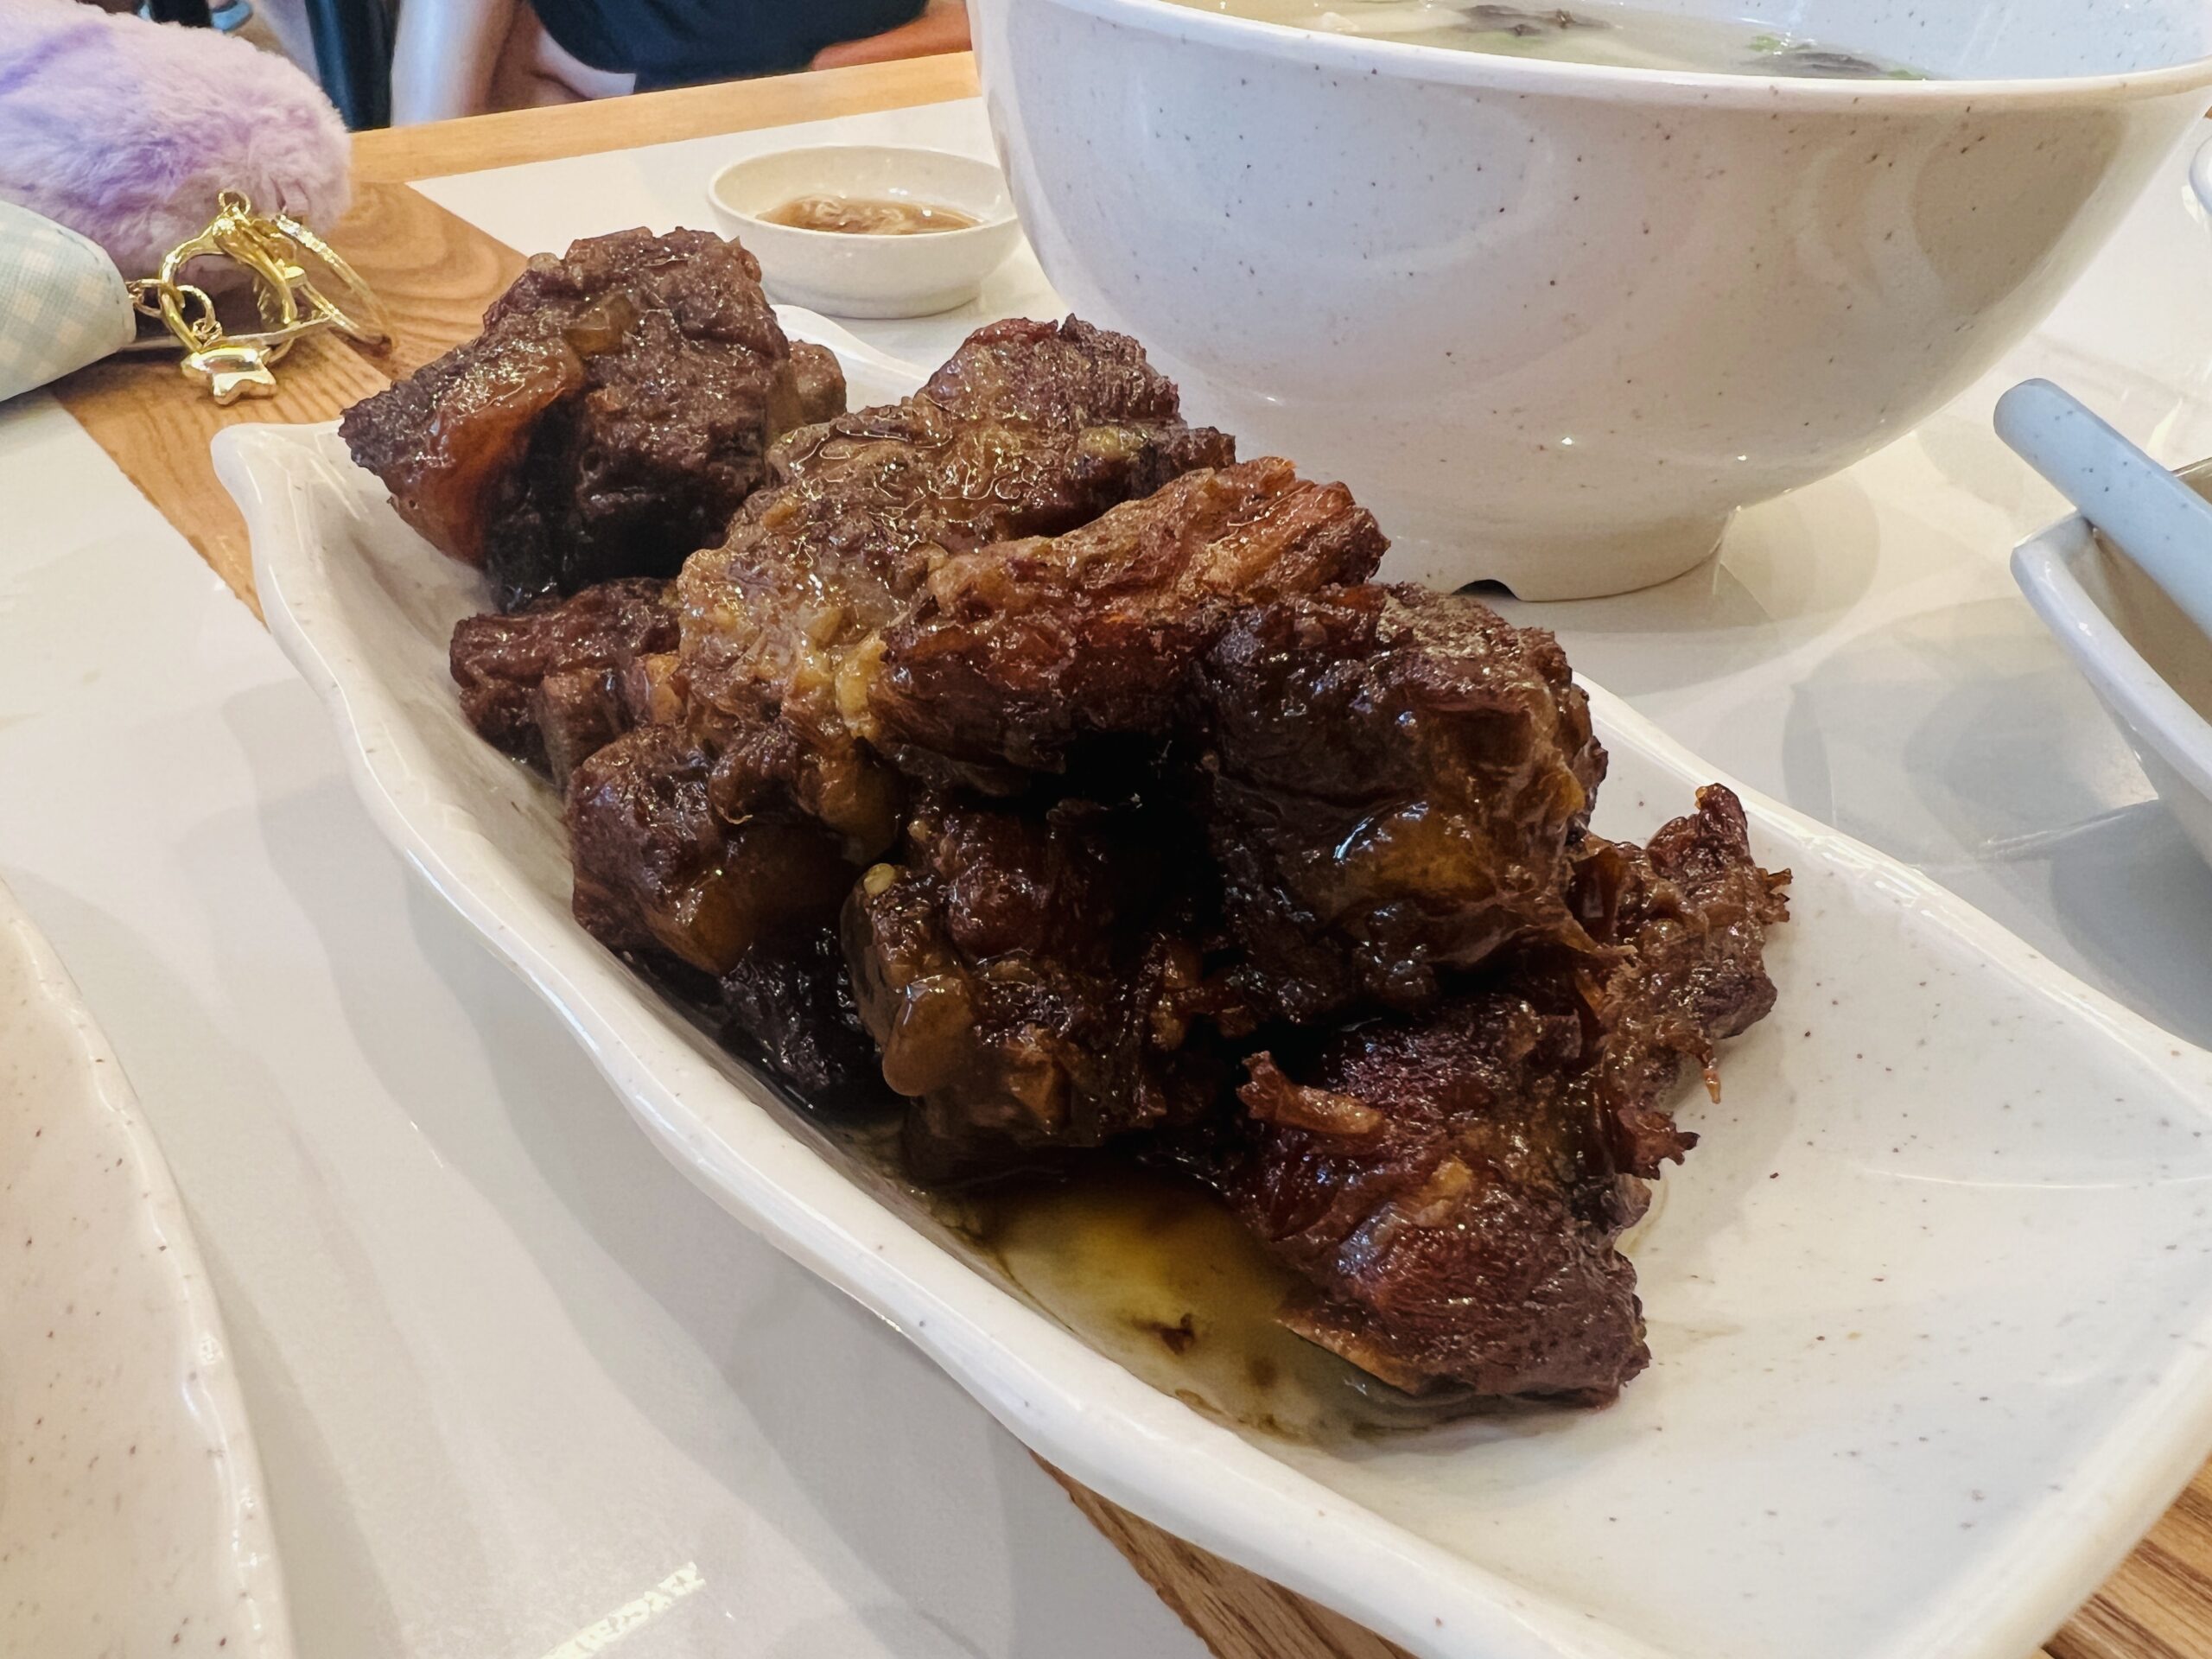 Shanghai Tan Pan-Fried Bun - Braised Pork Rib with Special Home-made Sauce